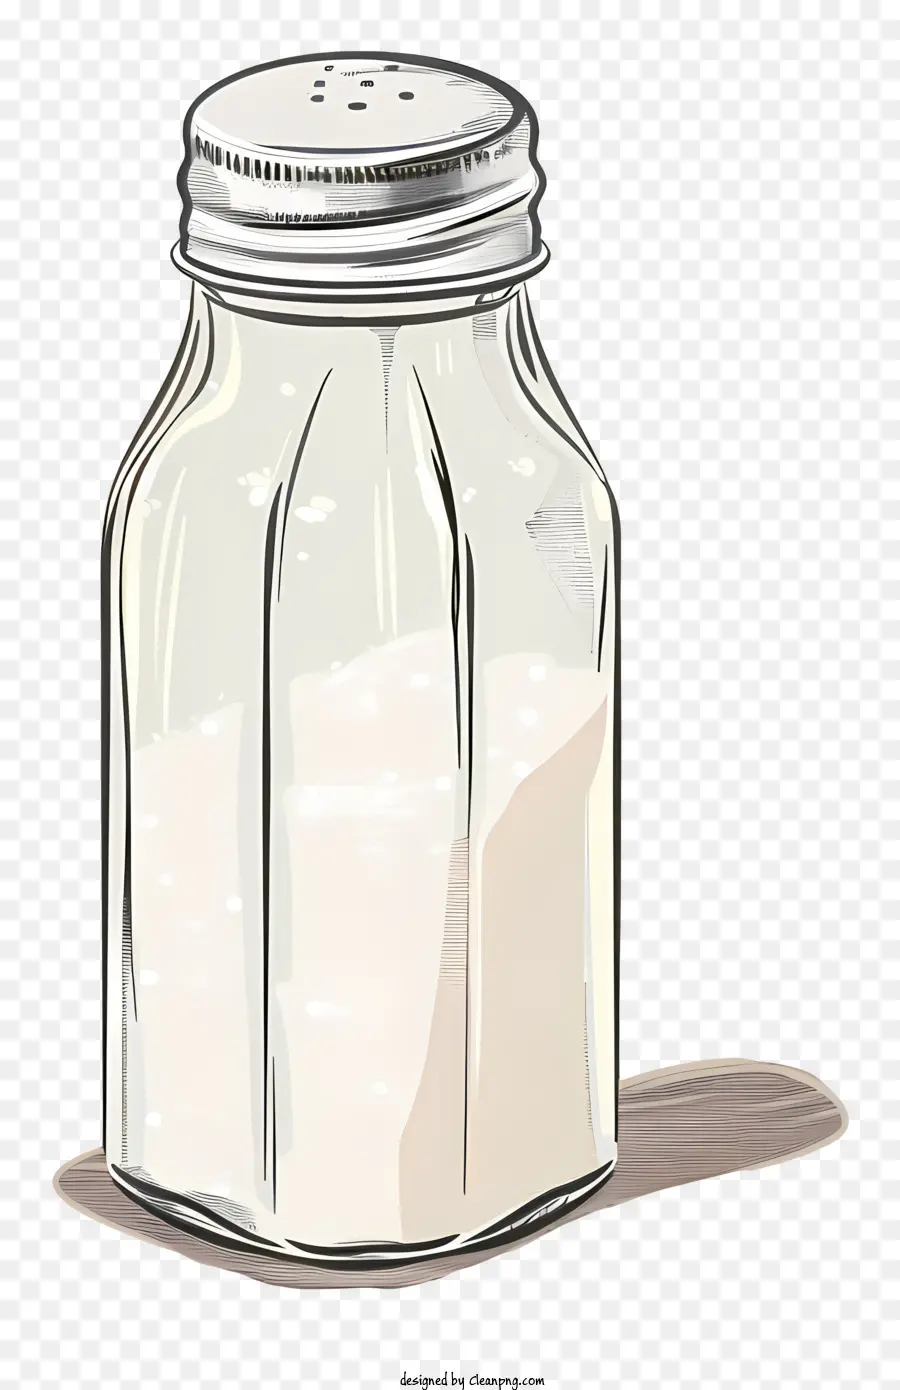 salt shaker glass jar white powder spice jar container